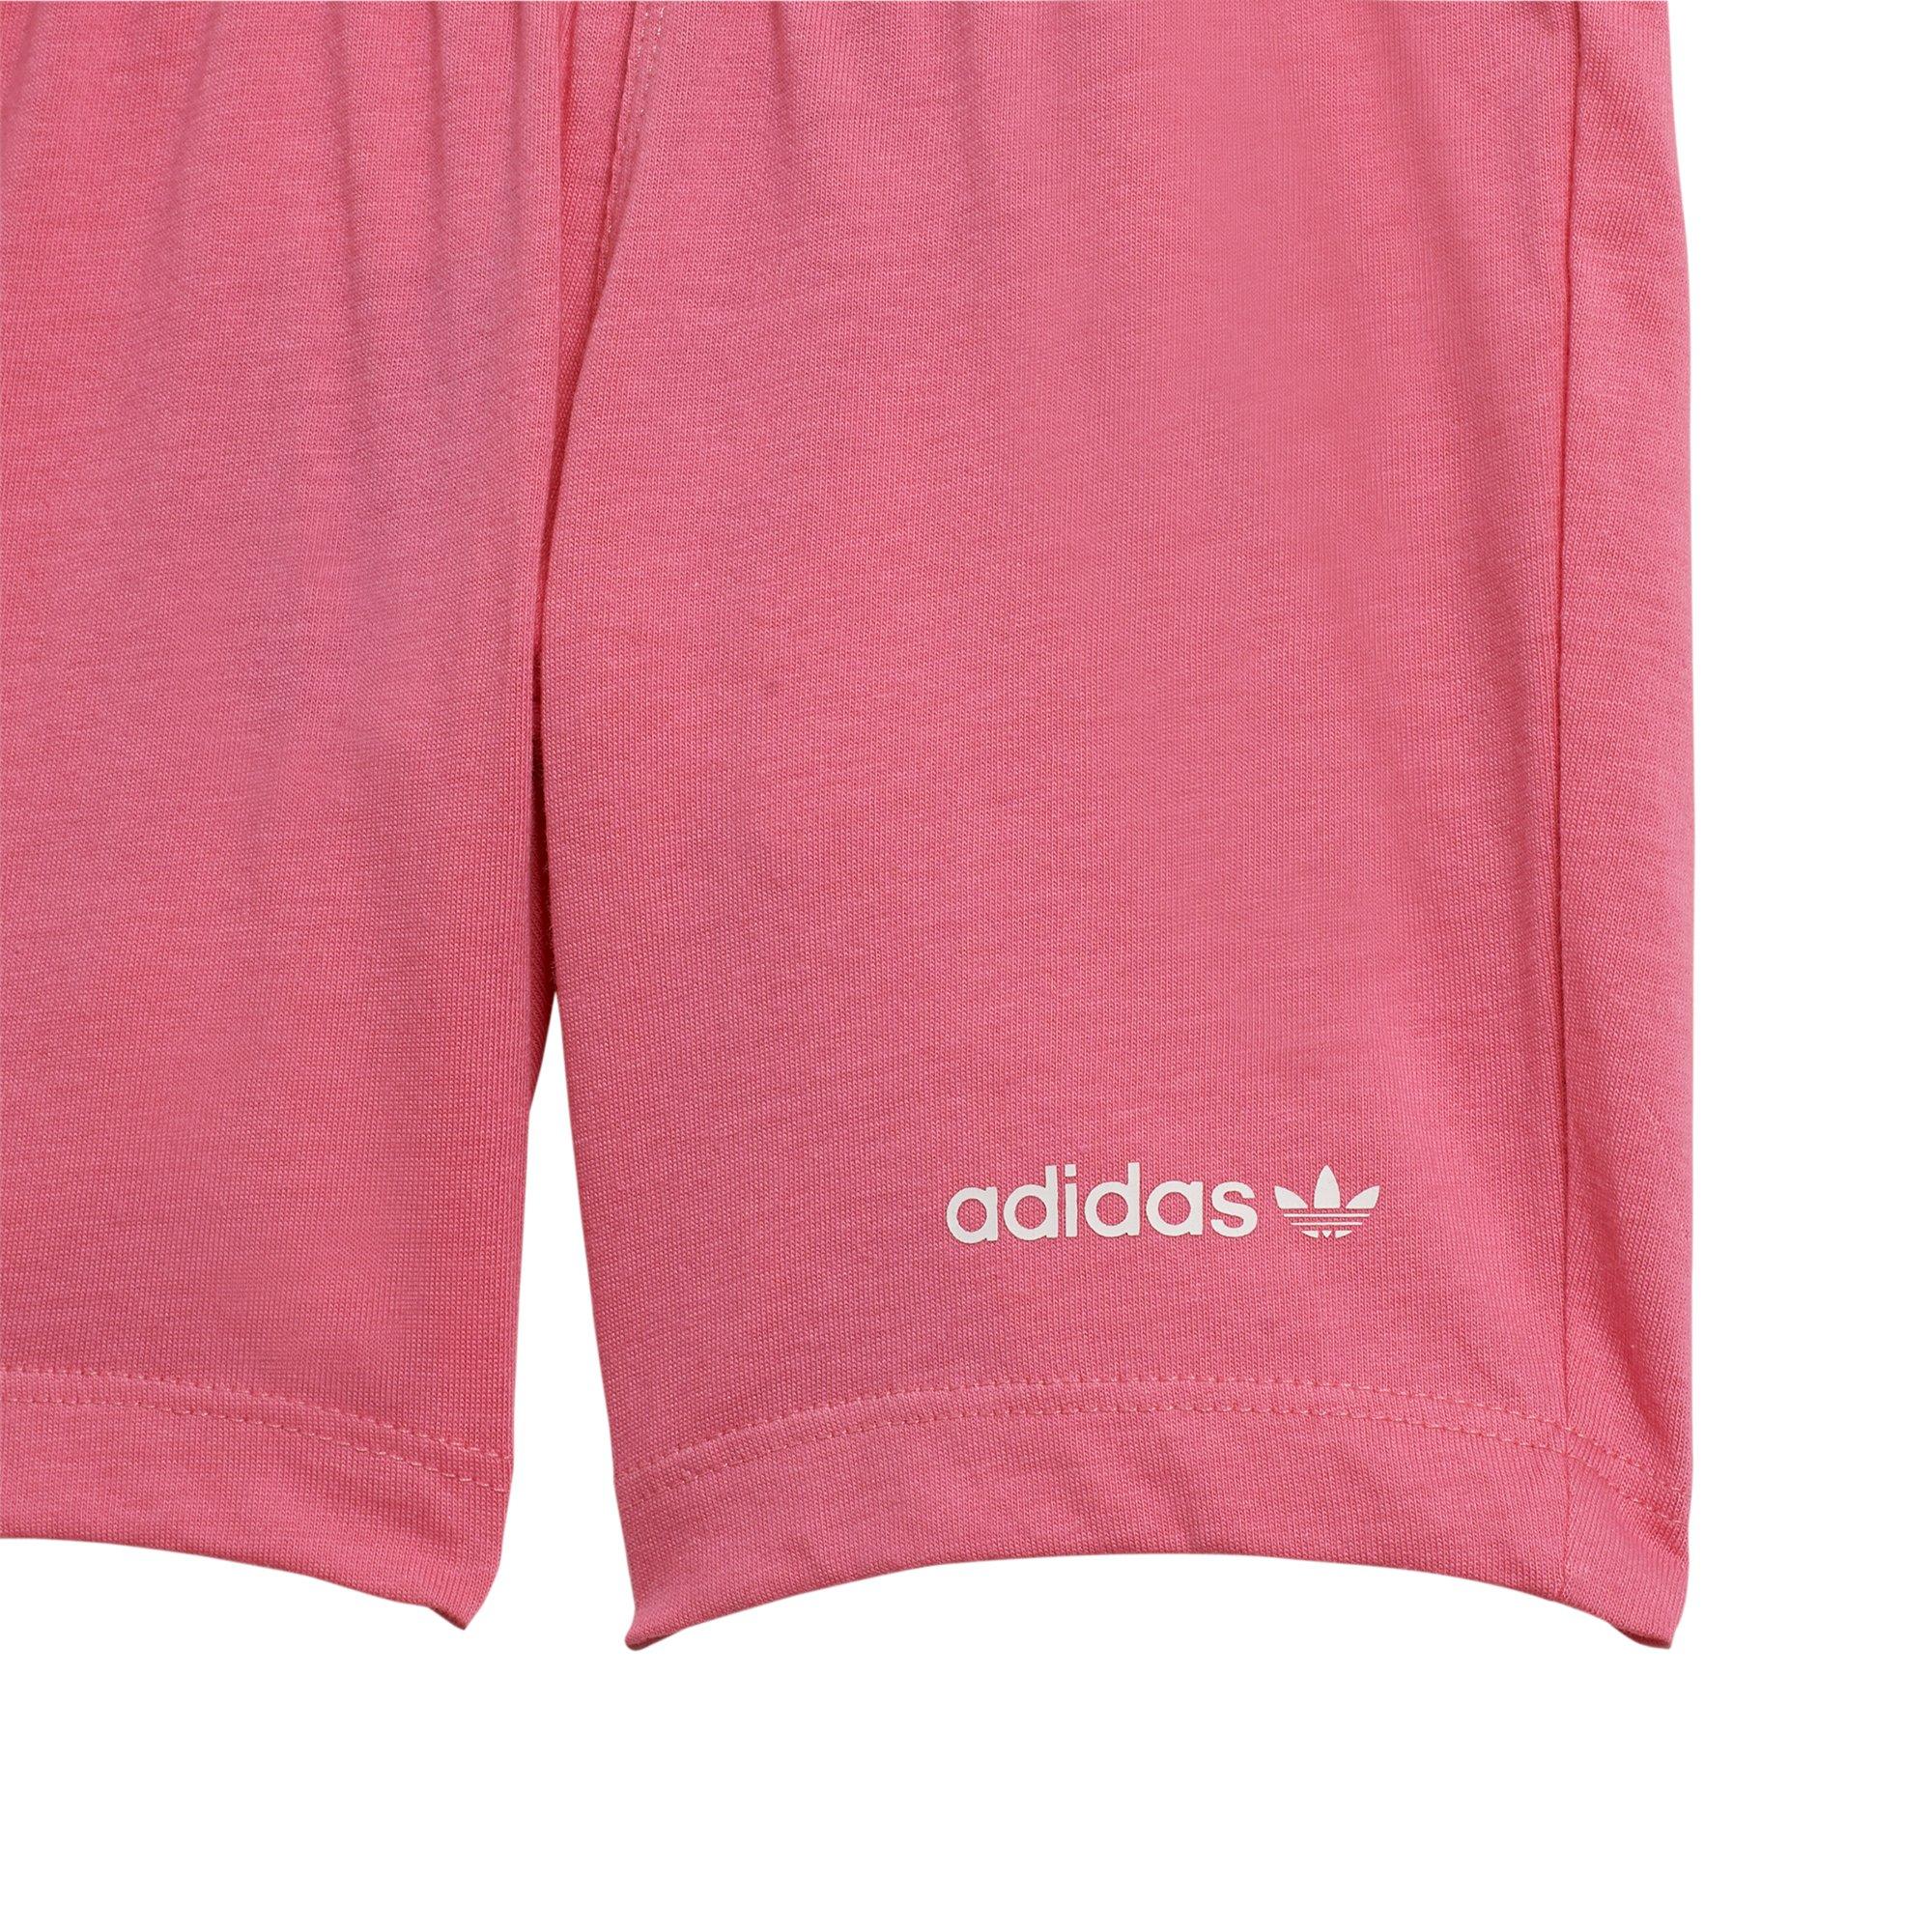 | - Originals Gear City Hibbett Set Girls\' Tee adidas Adicolor Shorts and White/Pink Toddler